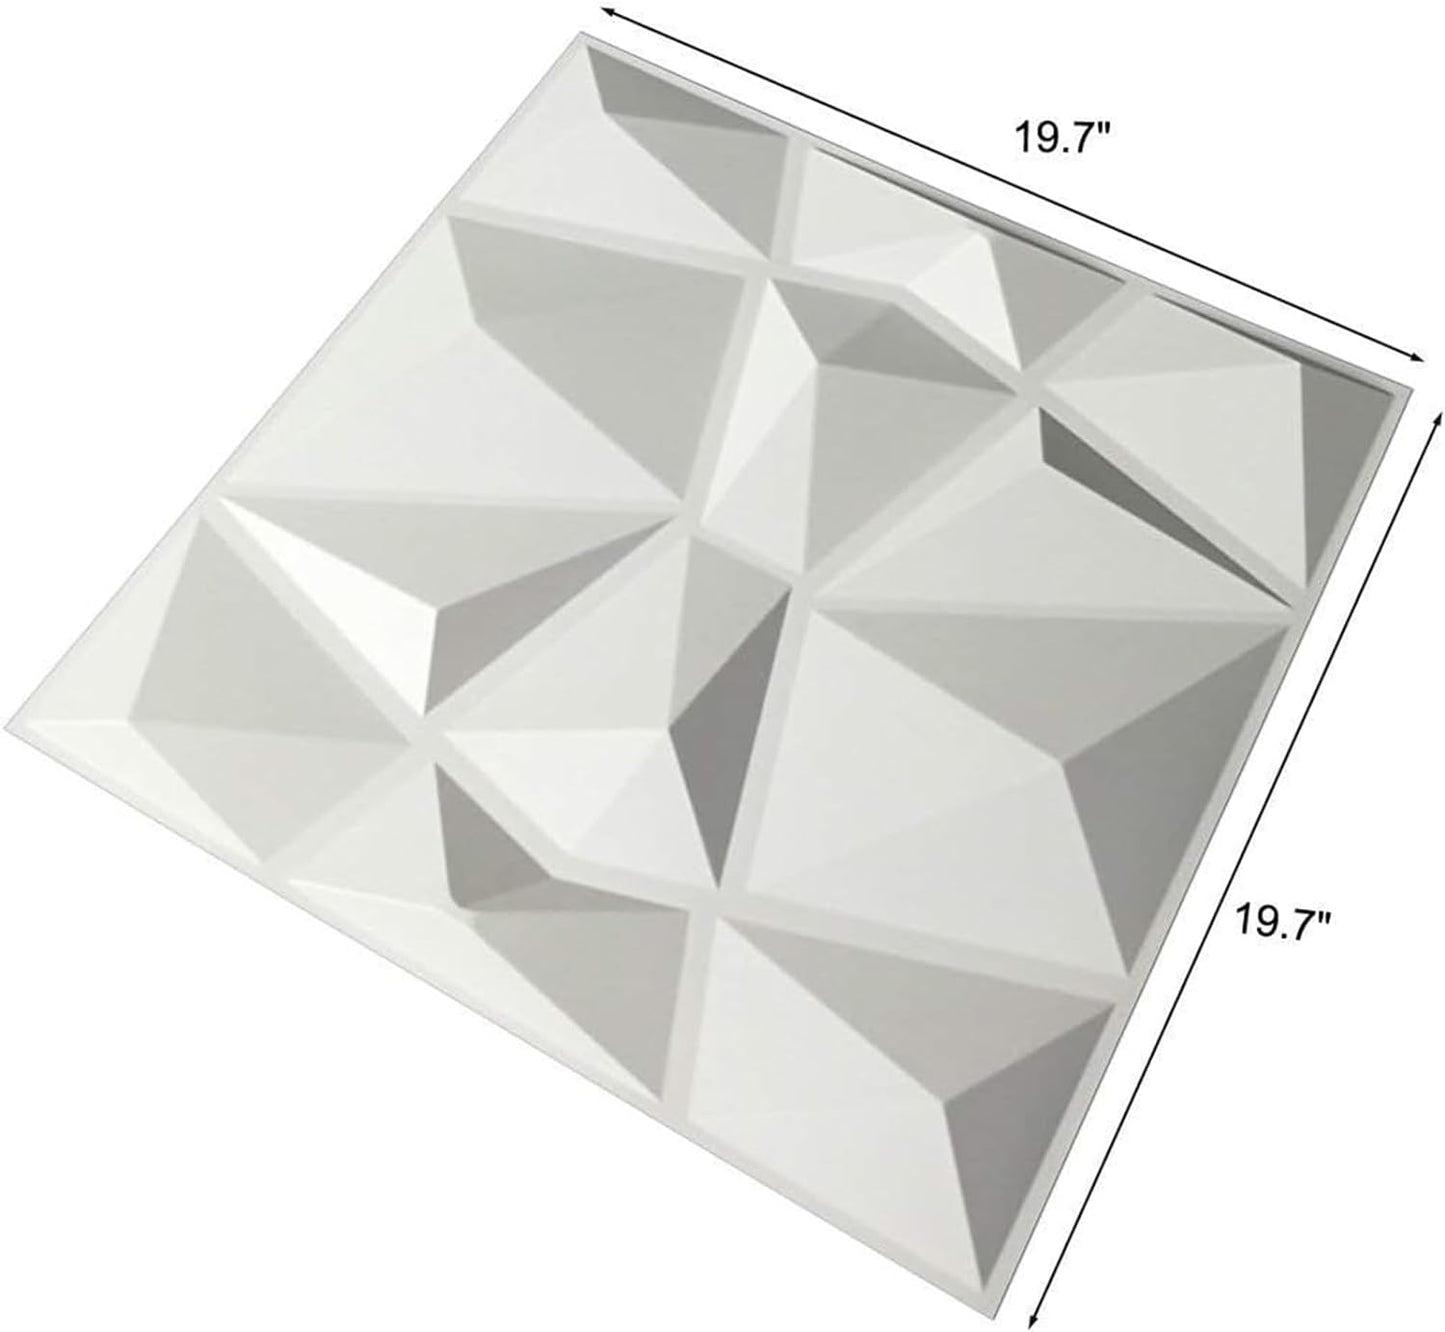 Art3d Textures Paneles de pared 3D Diseño de diamante blanco Paquete de 12 azulejos 32 pies cuadrados (PVC)